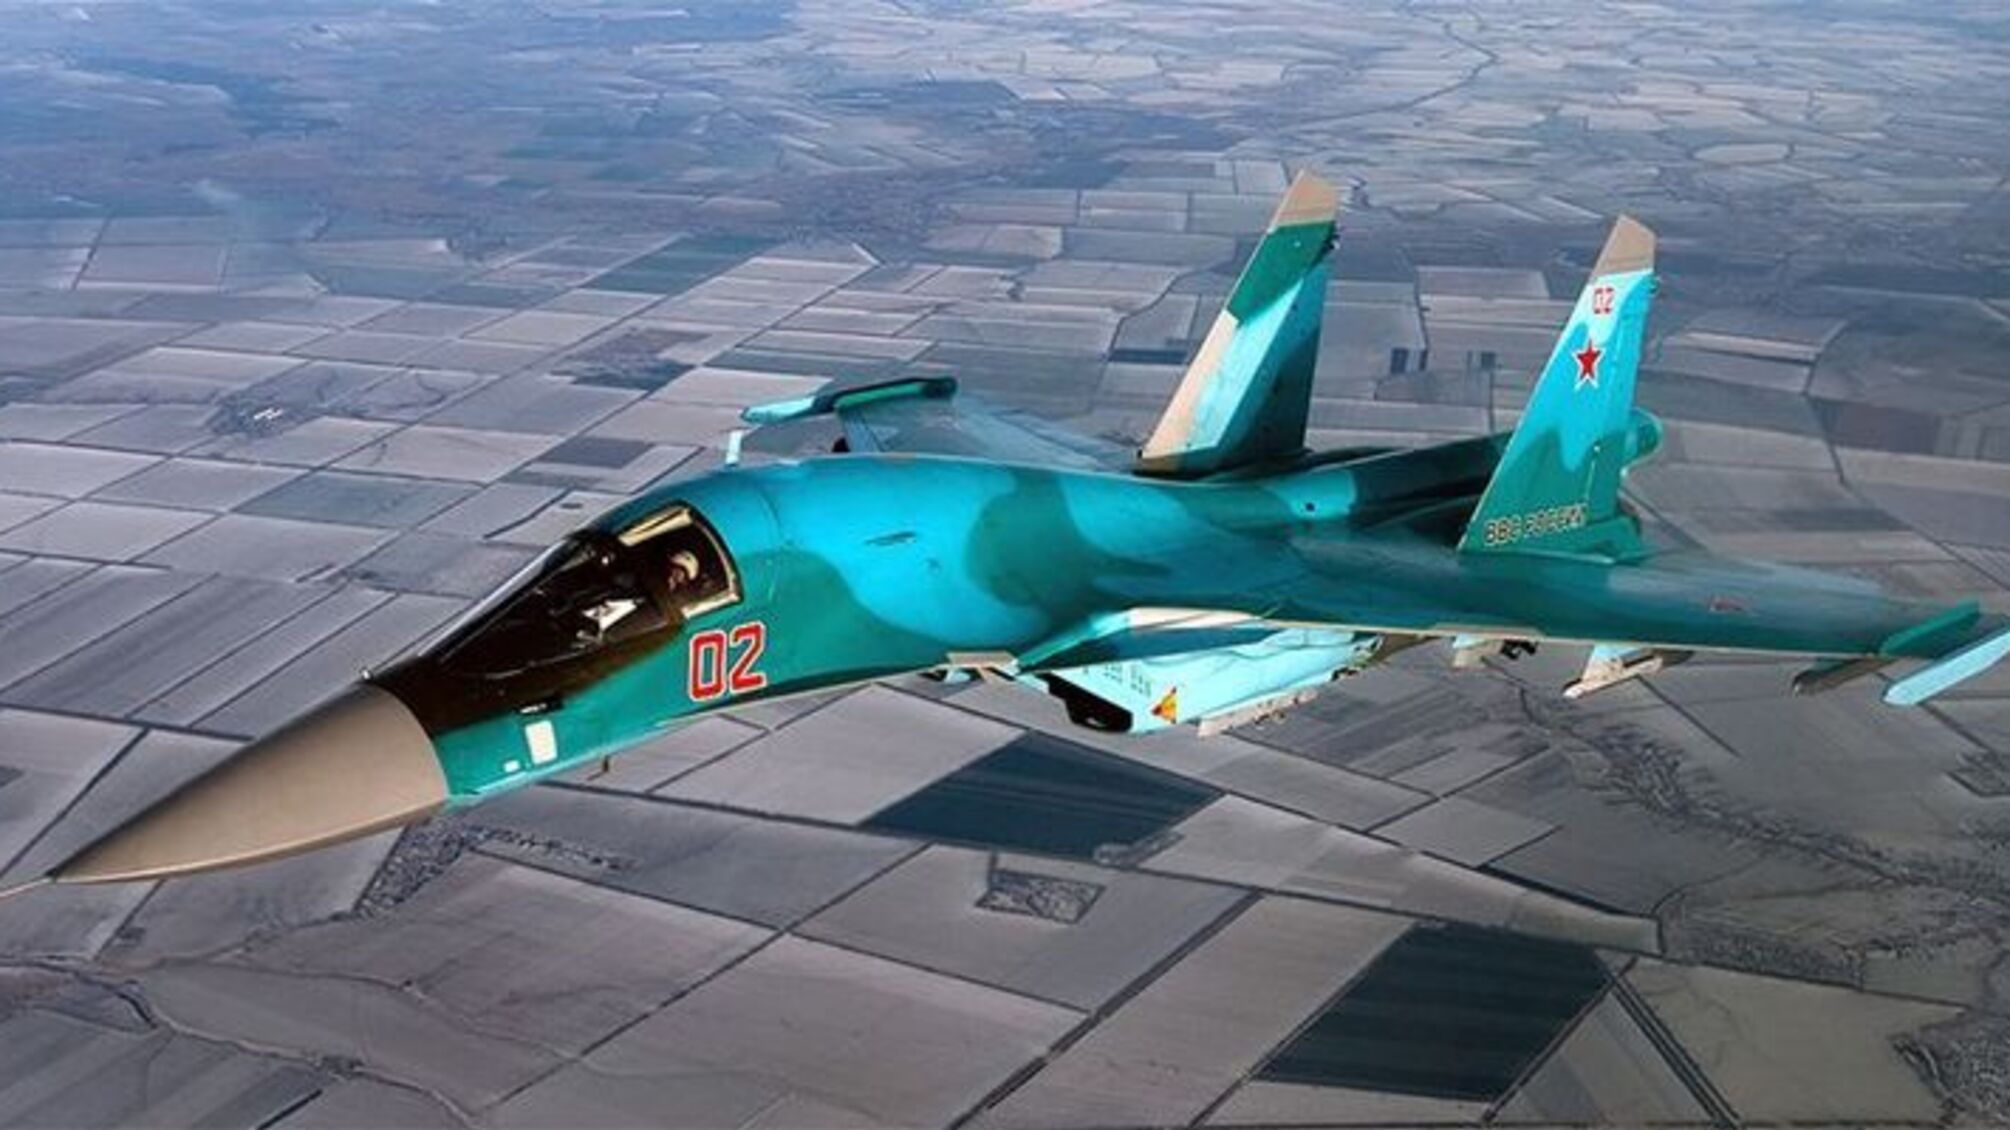 Цена одного самолета Су-34 не менее $50 млн.